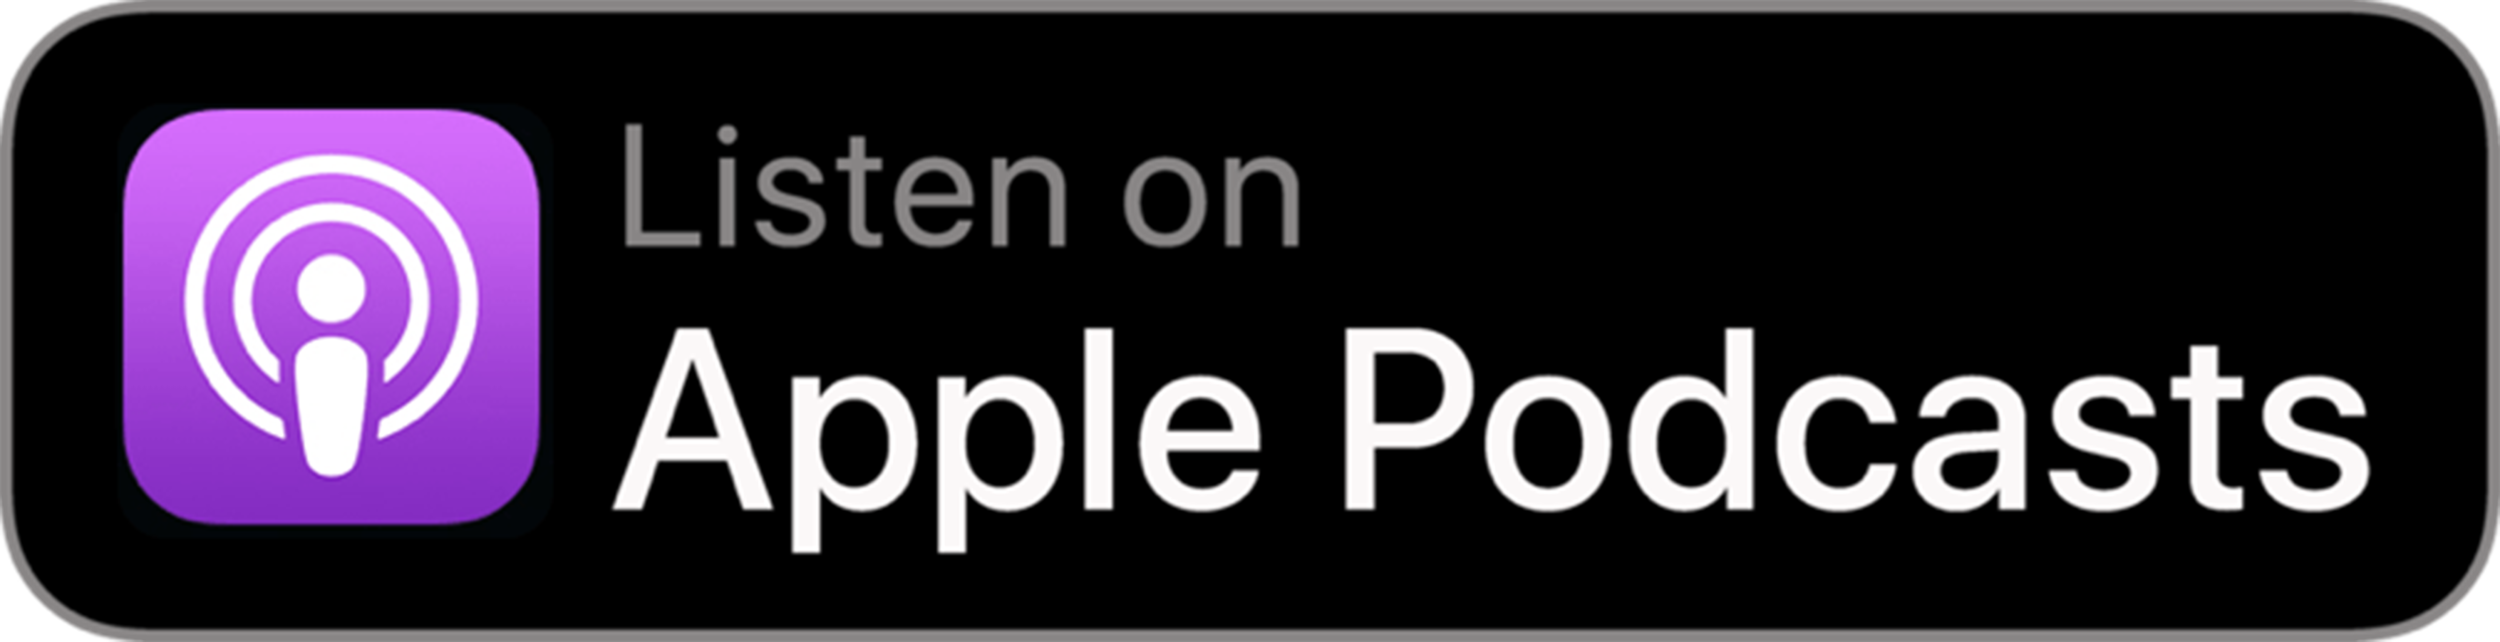 Listen on Apple Podcasts (Copy)